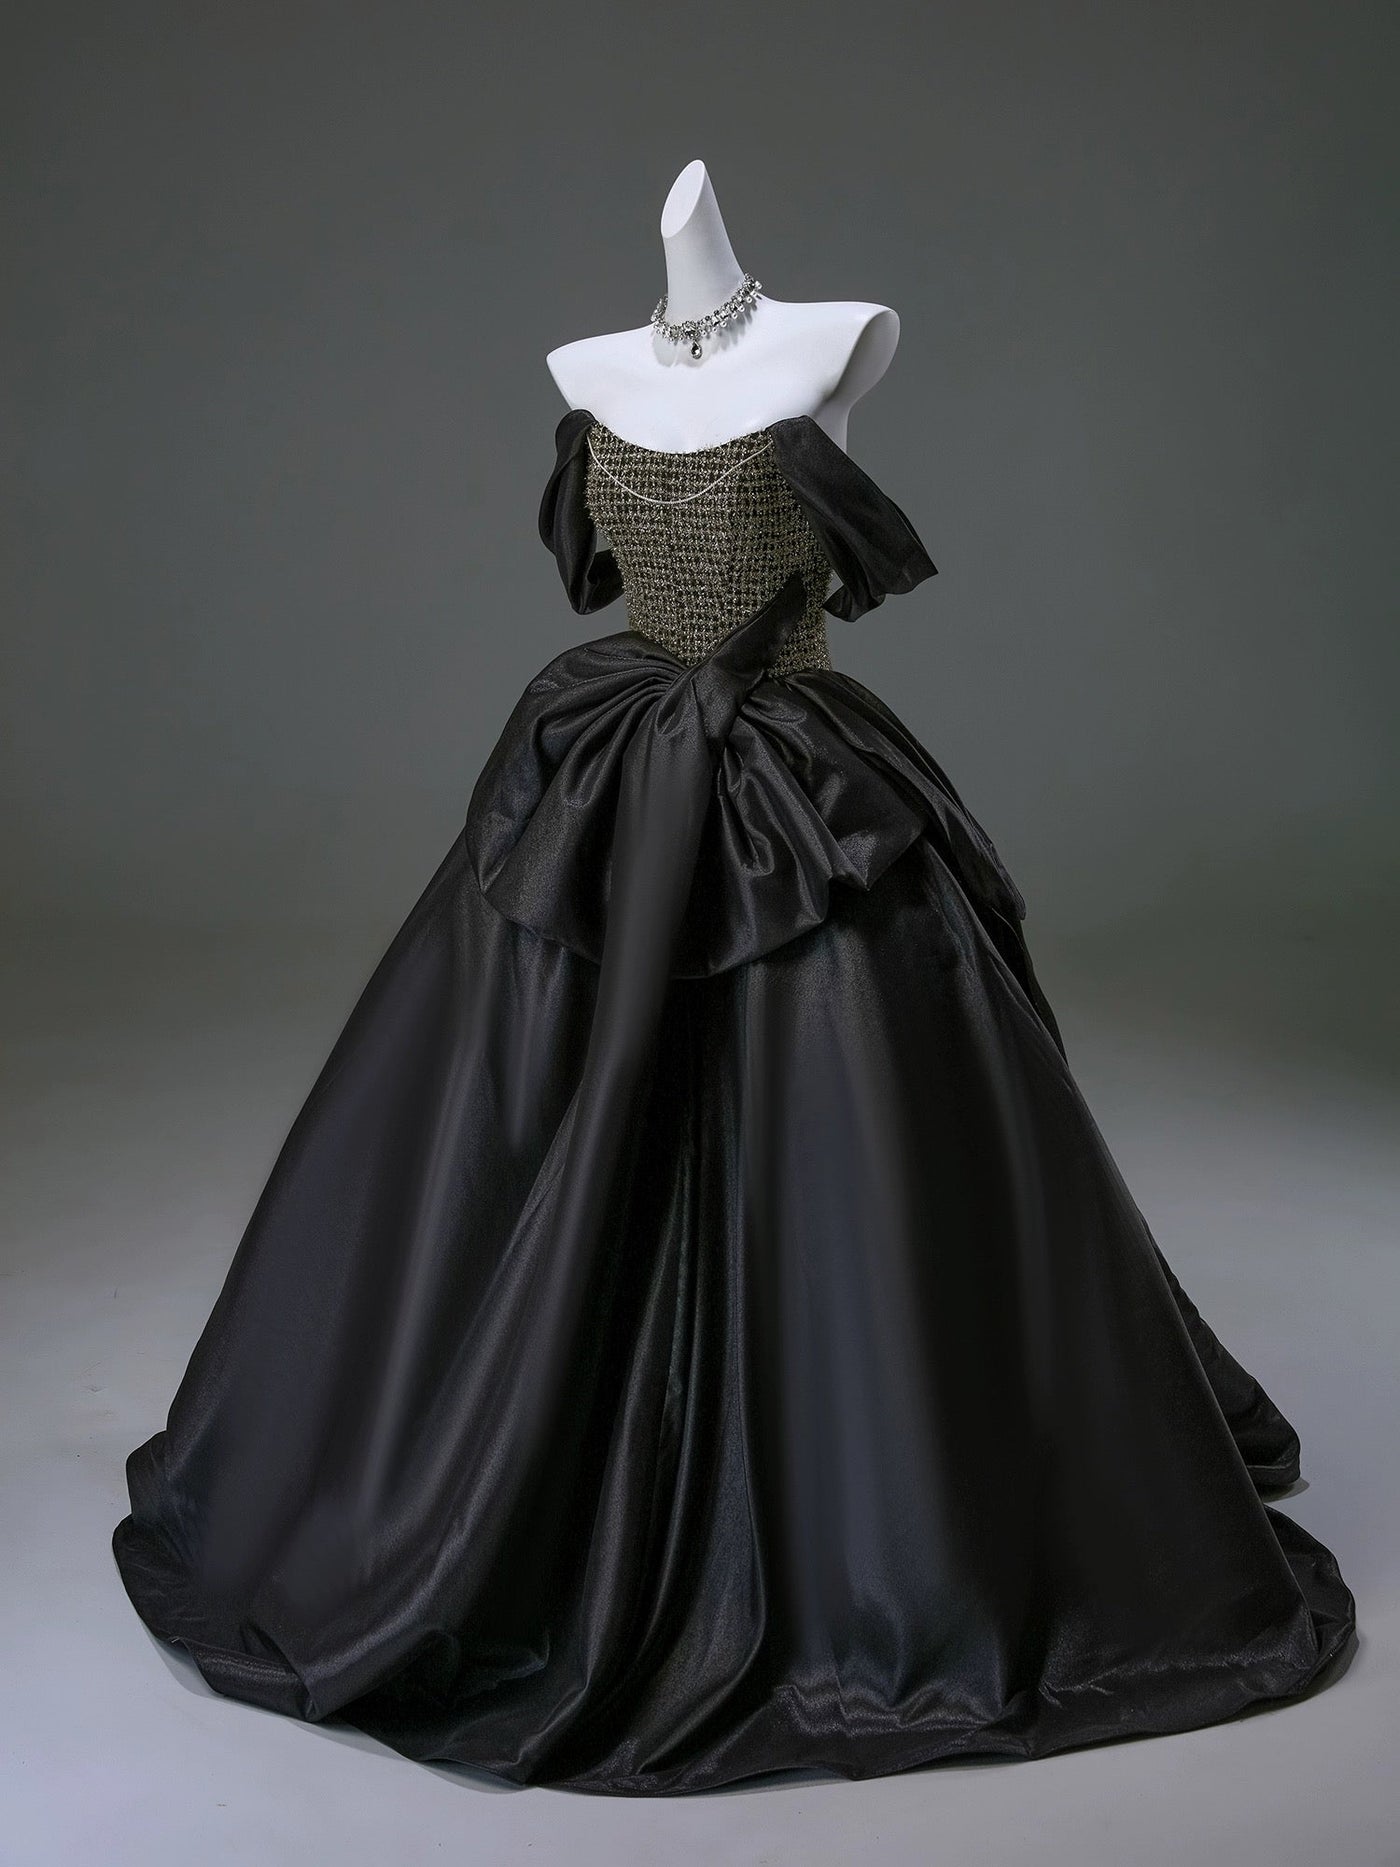 Gothic Black Satin Evening Dress - Off-Shoulder Beaded Golden Corset Ball Gown Plus Size - WonderlandByLilian